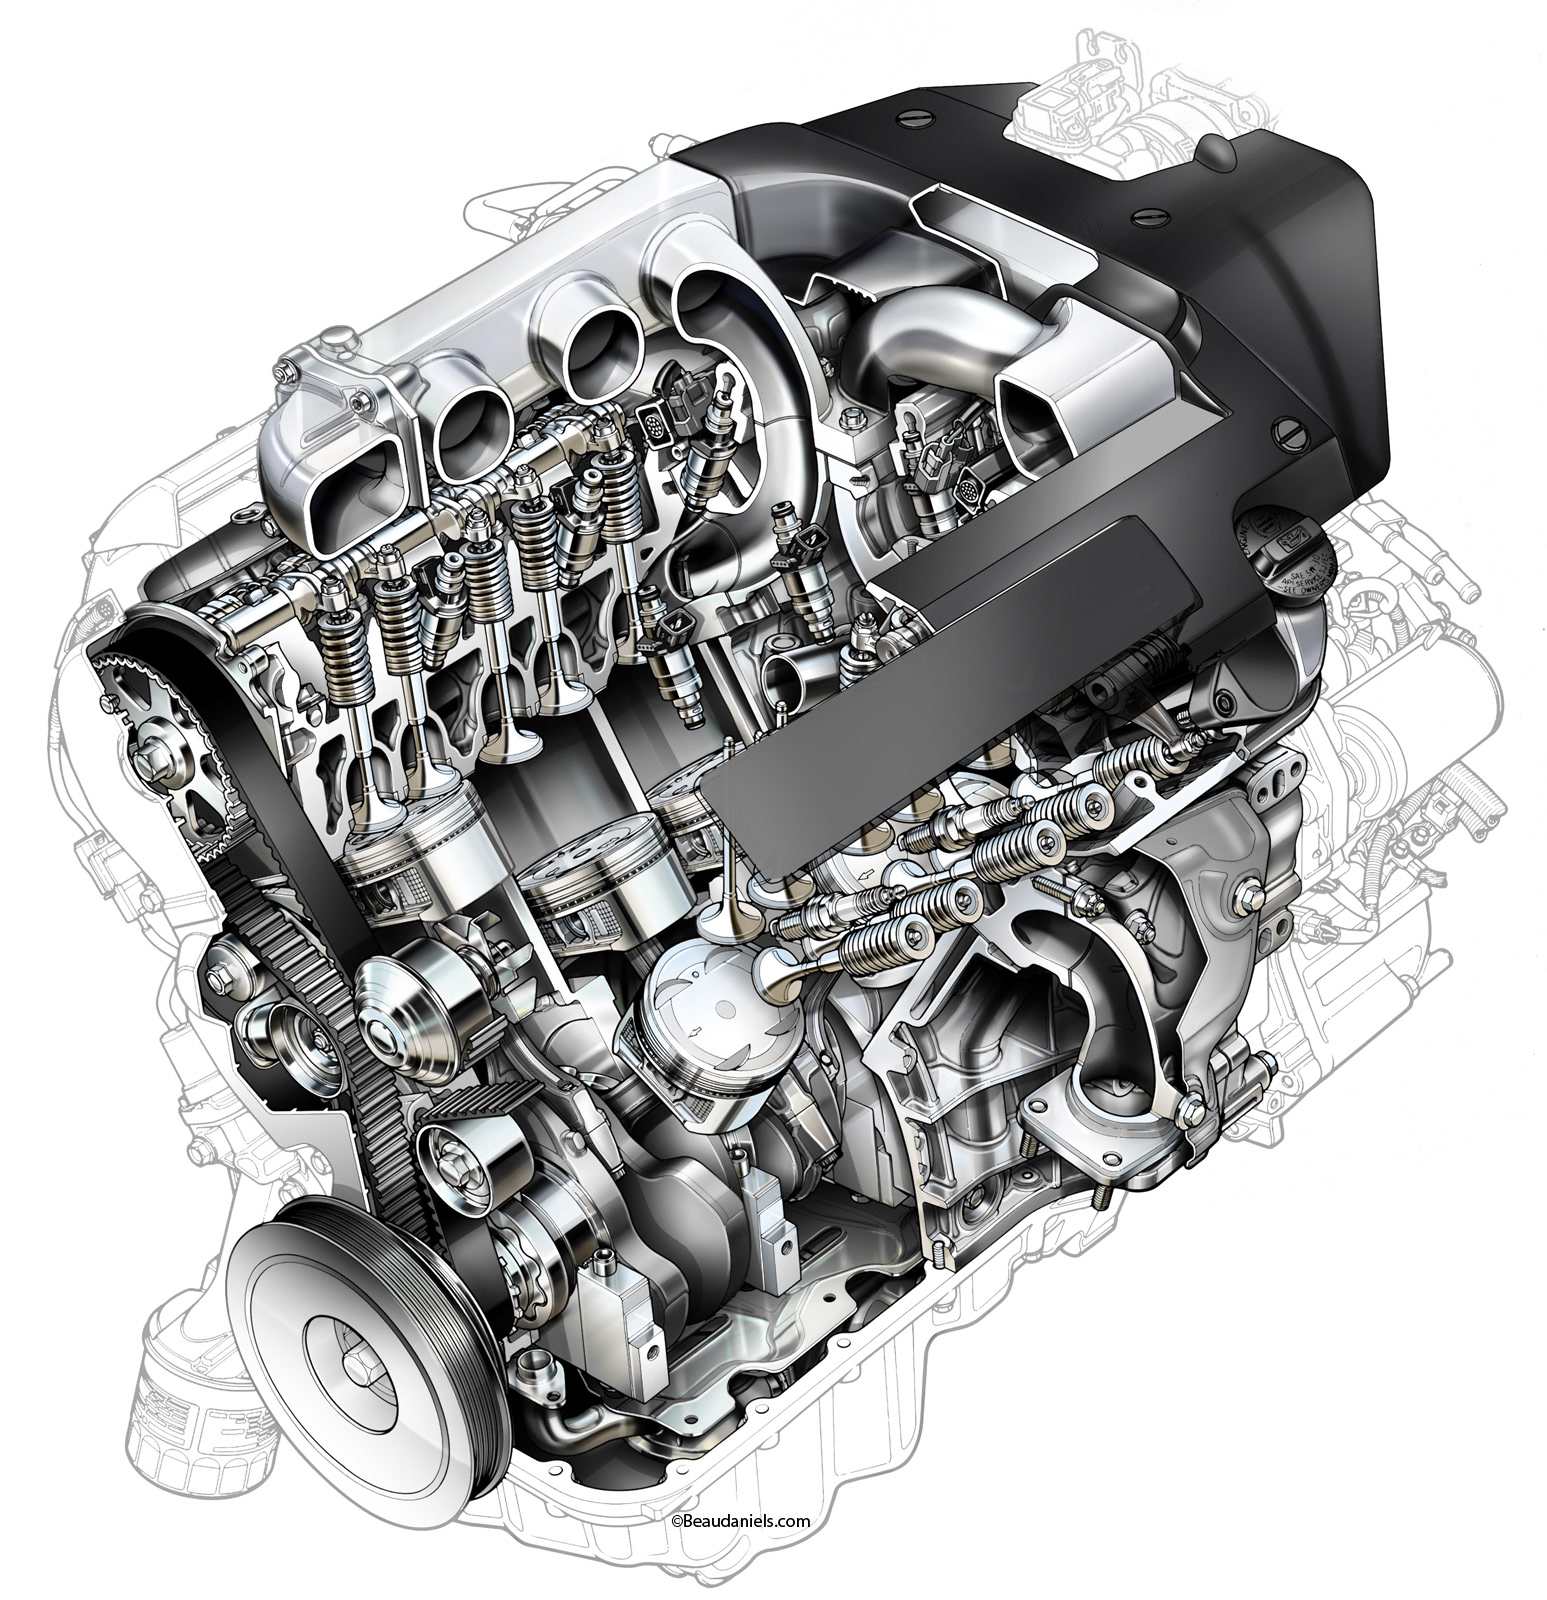 Technical illustration, Beau and Alan Daniels. - Cutaway Automotive Engines